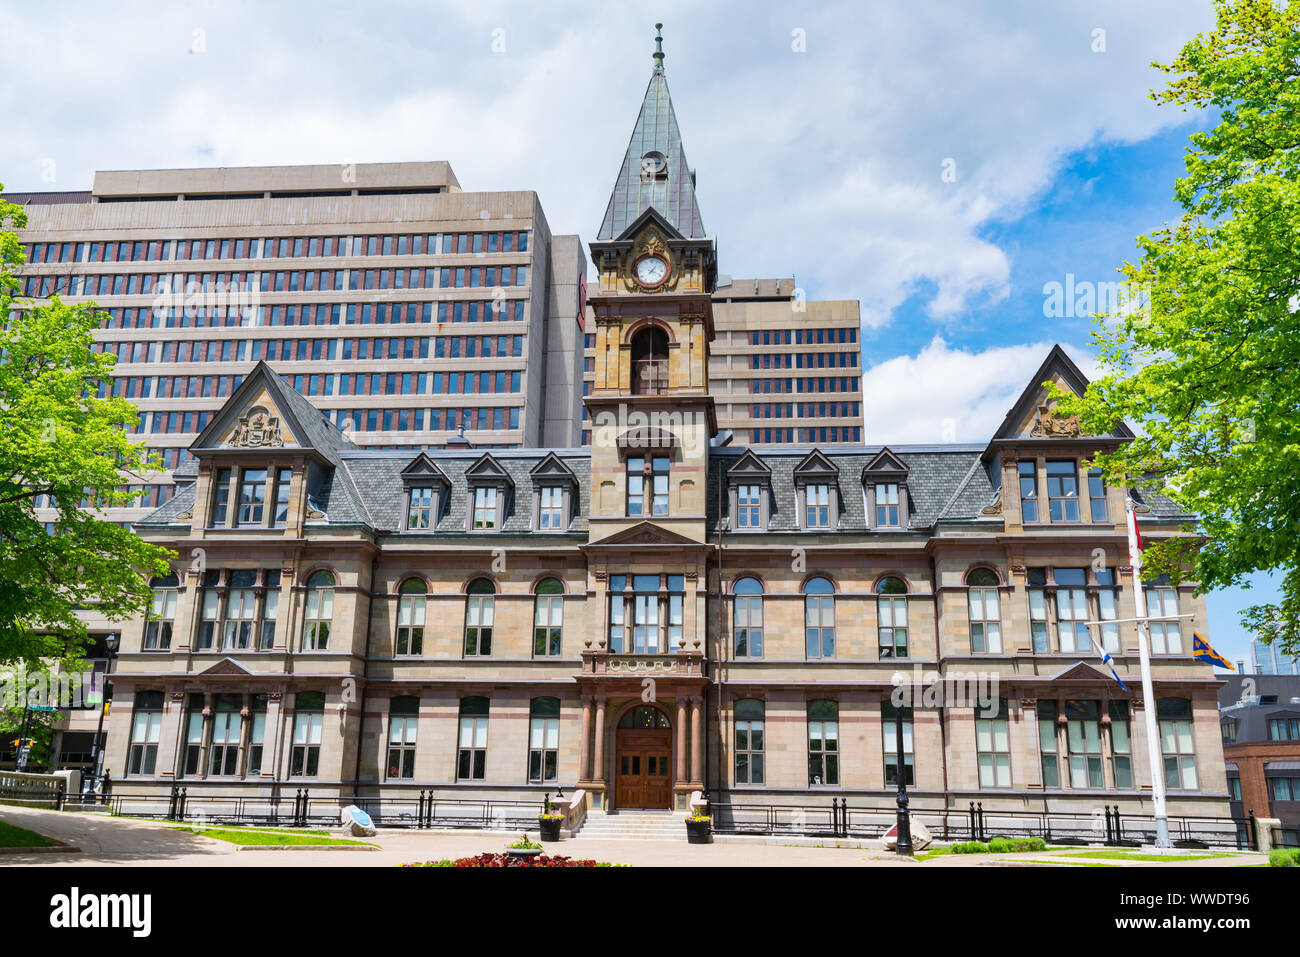 Halifax, Canada - June 19, 2019: Halifax City Hall building on the Grand Parade Square in Halifax, Nova Scotia, Canada Stock Photo